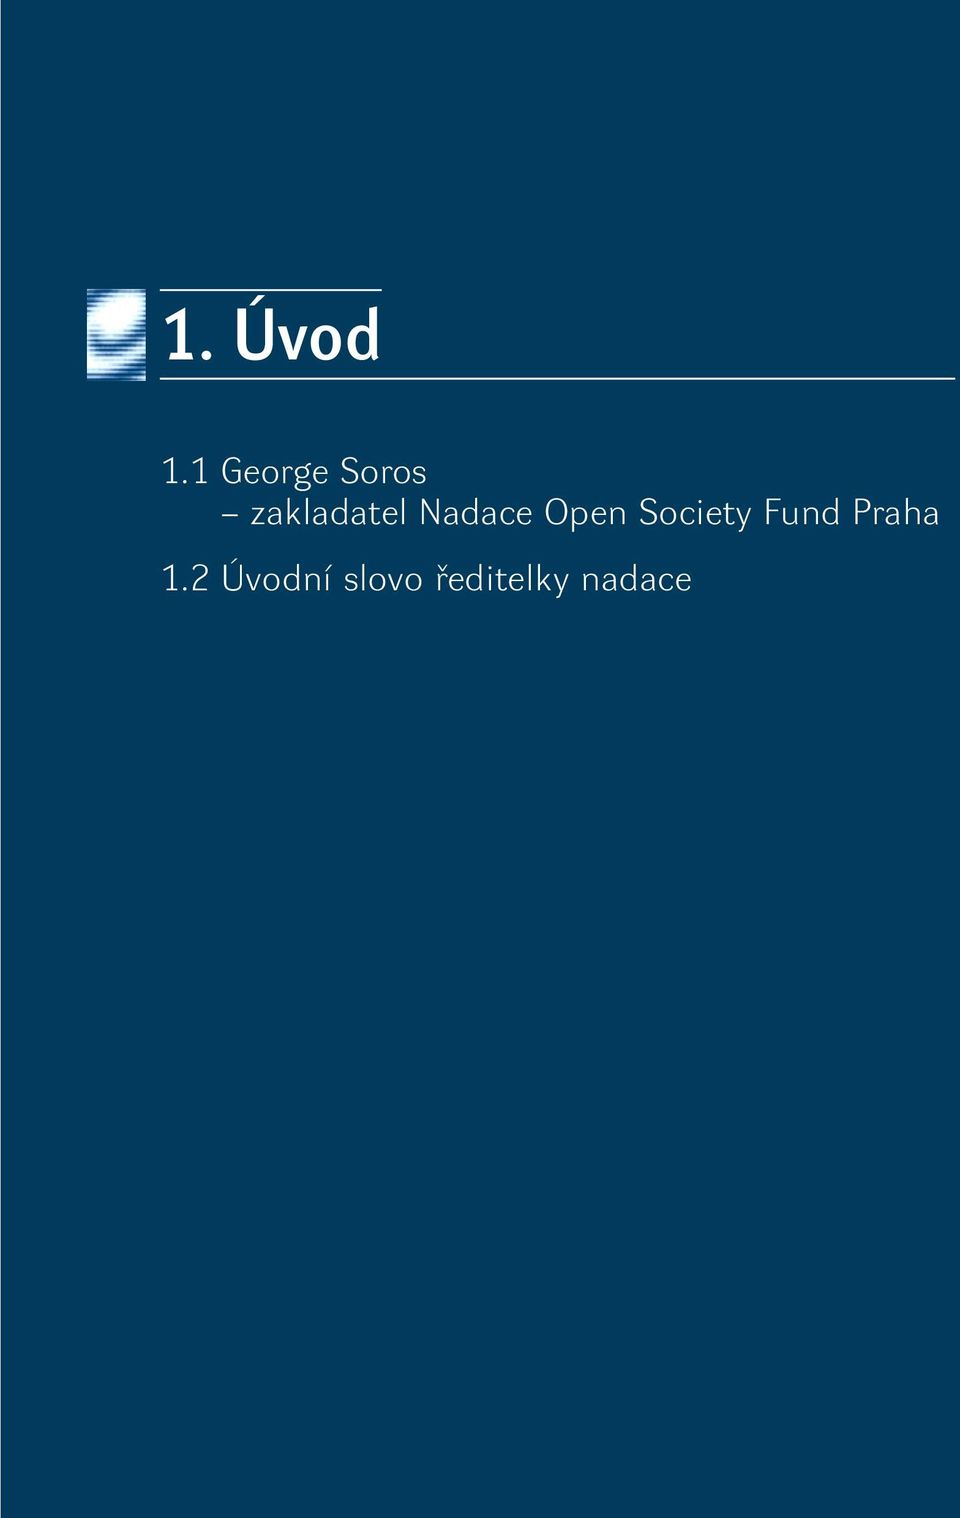 Nadace Open Society Fund